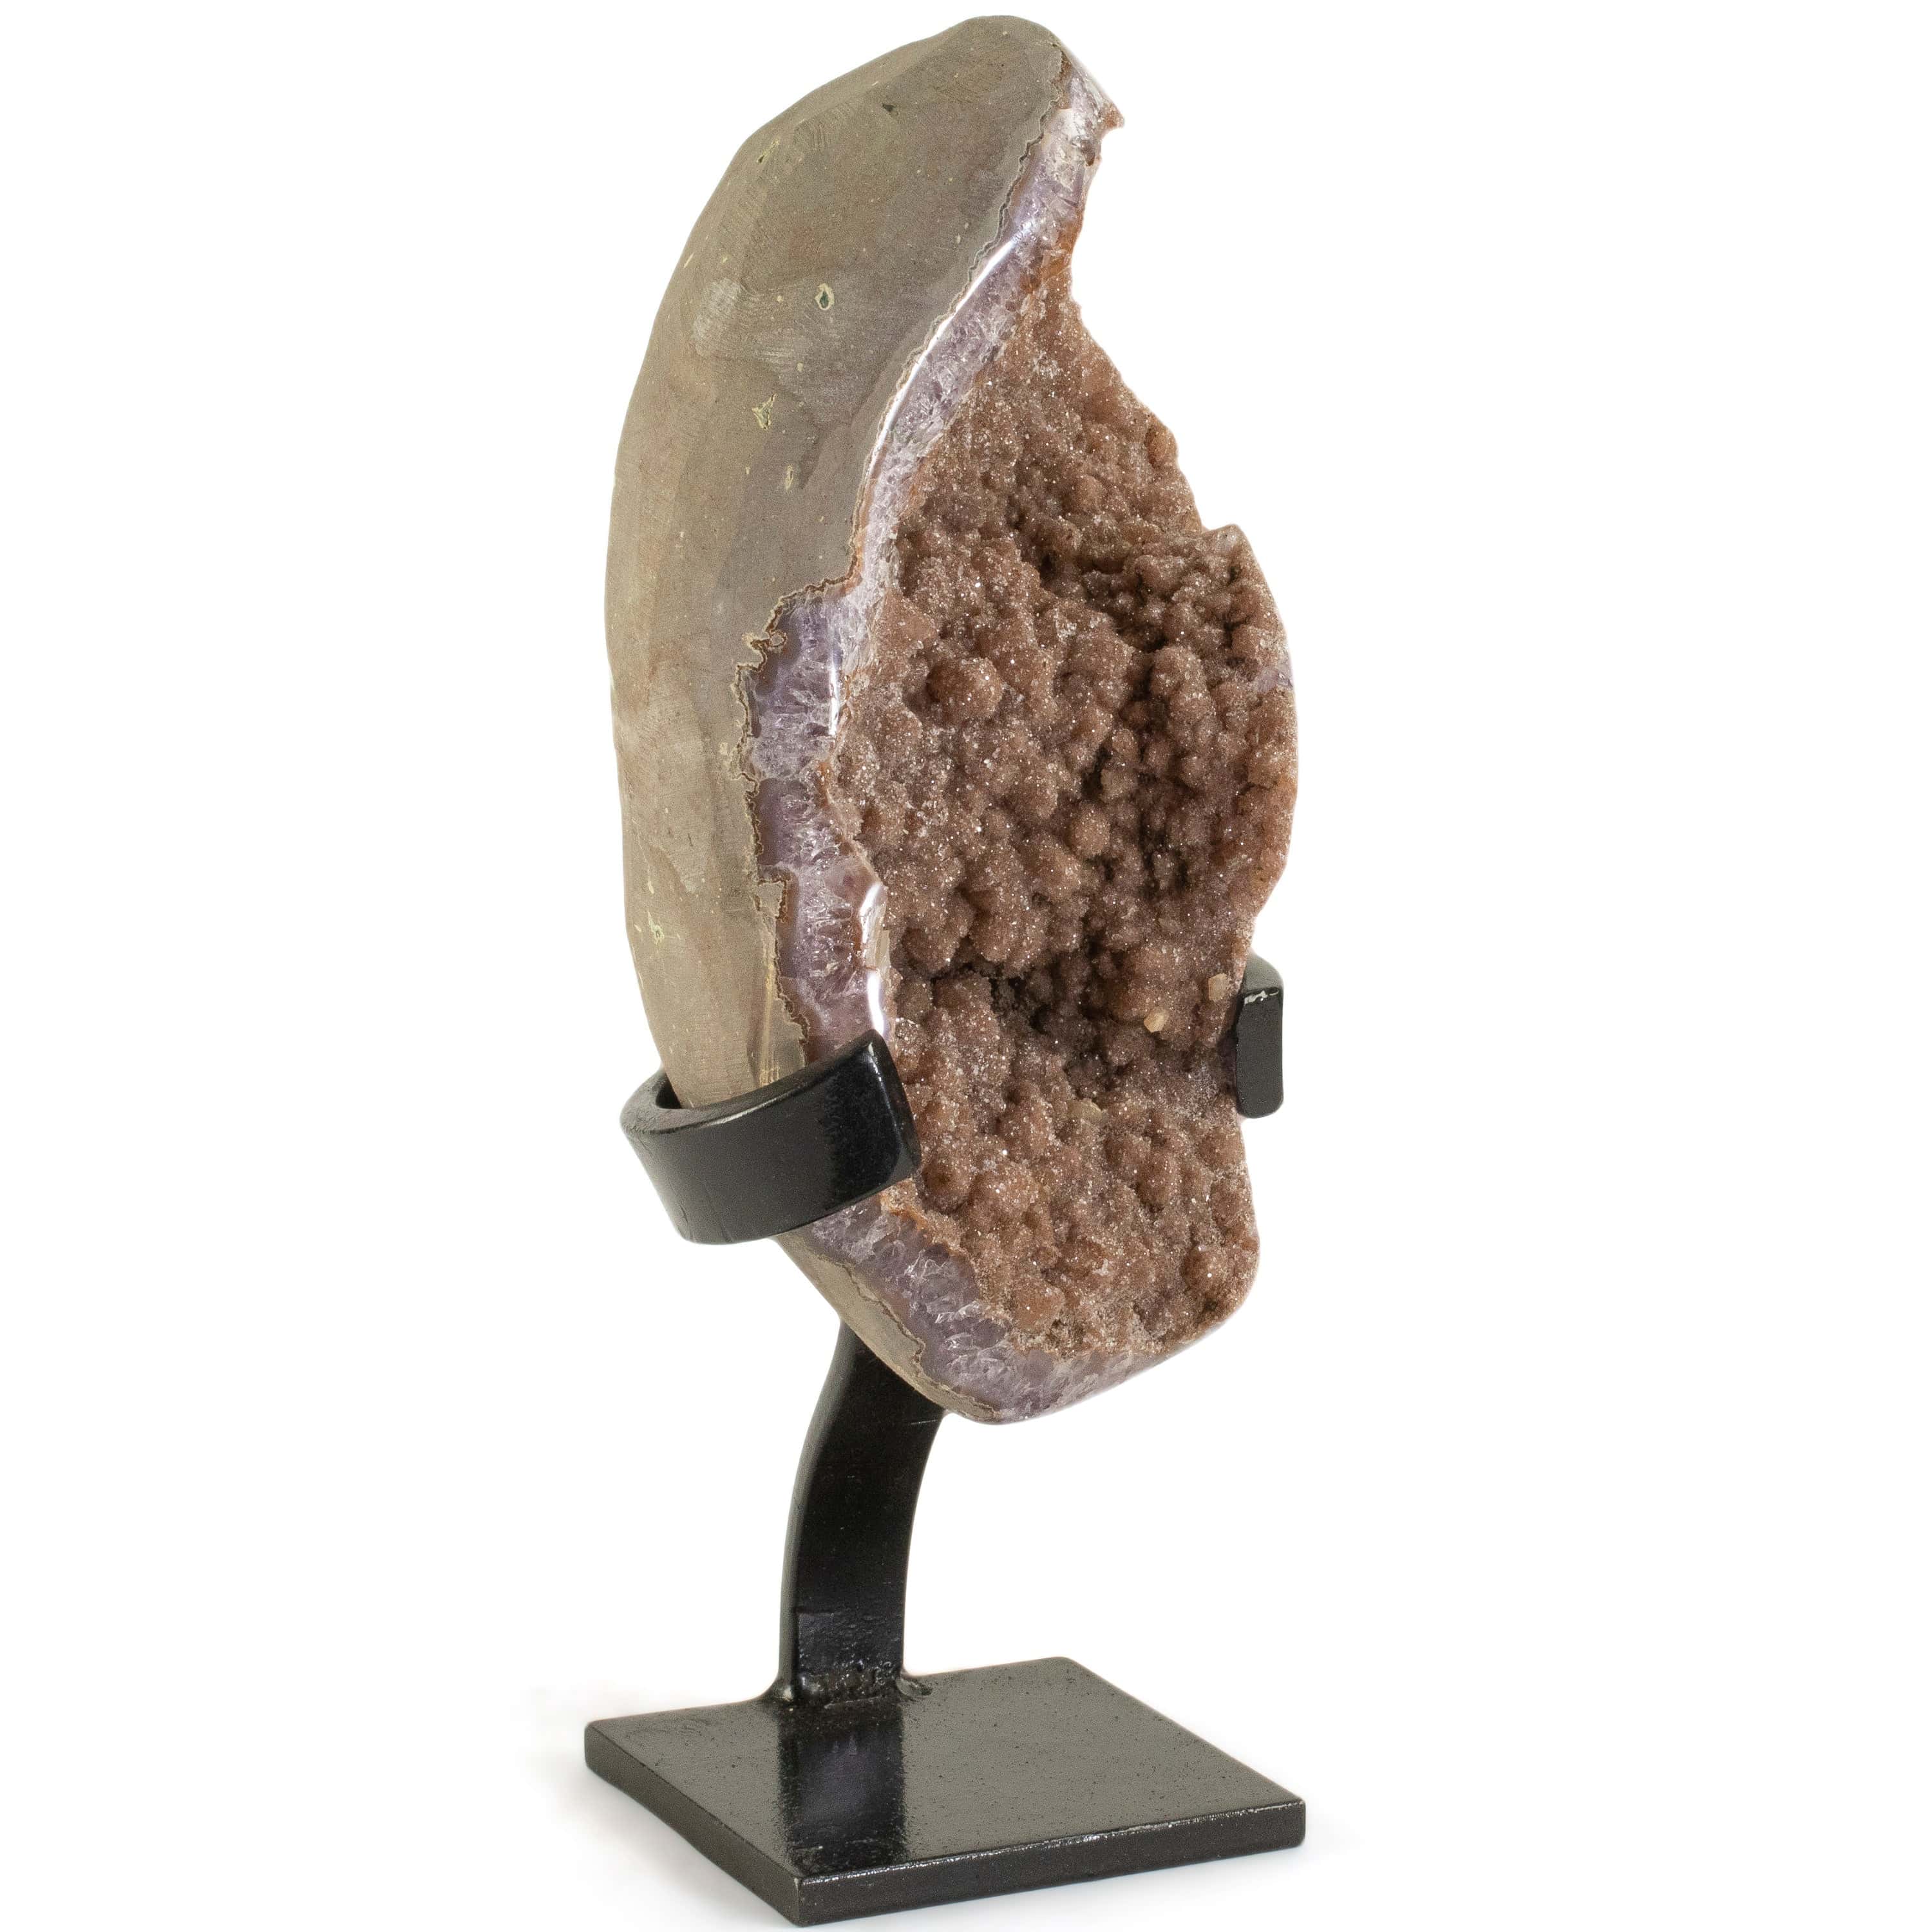 Kalifano Amethyst Uruguayan Amethyst Geode on Custom Stand - 10.3 lbs / 13 in. UAG2200.015